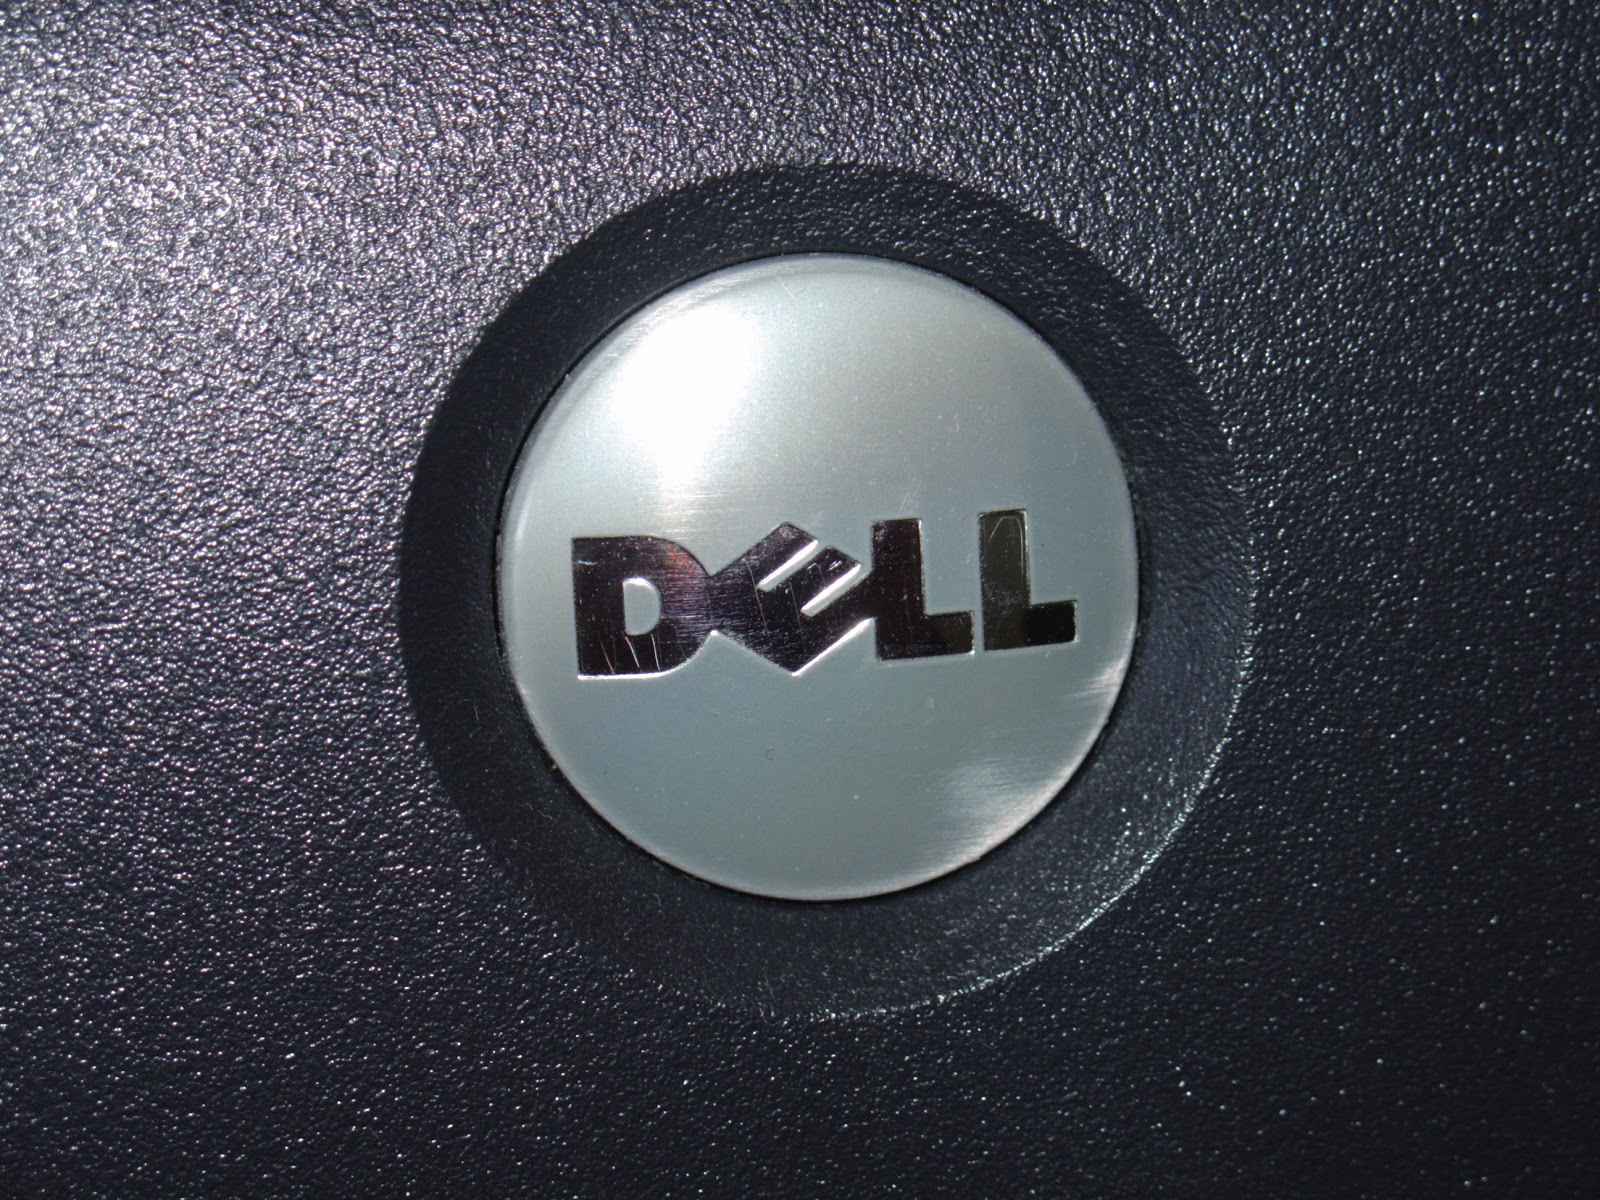 Dell Server Wallpaper Image